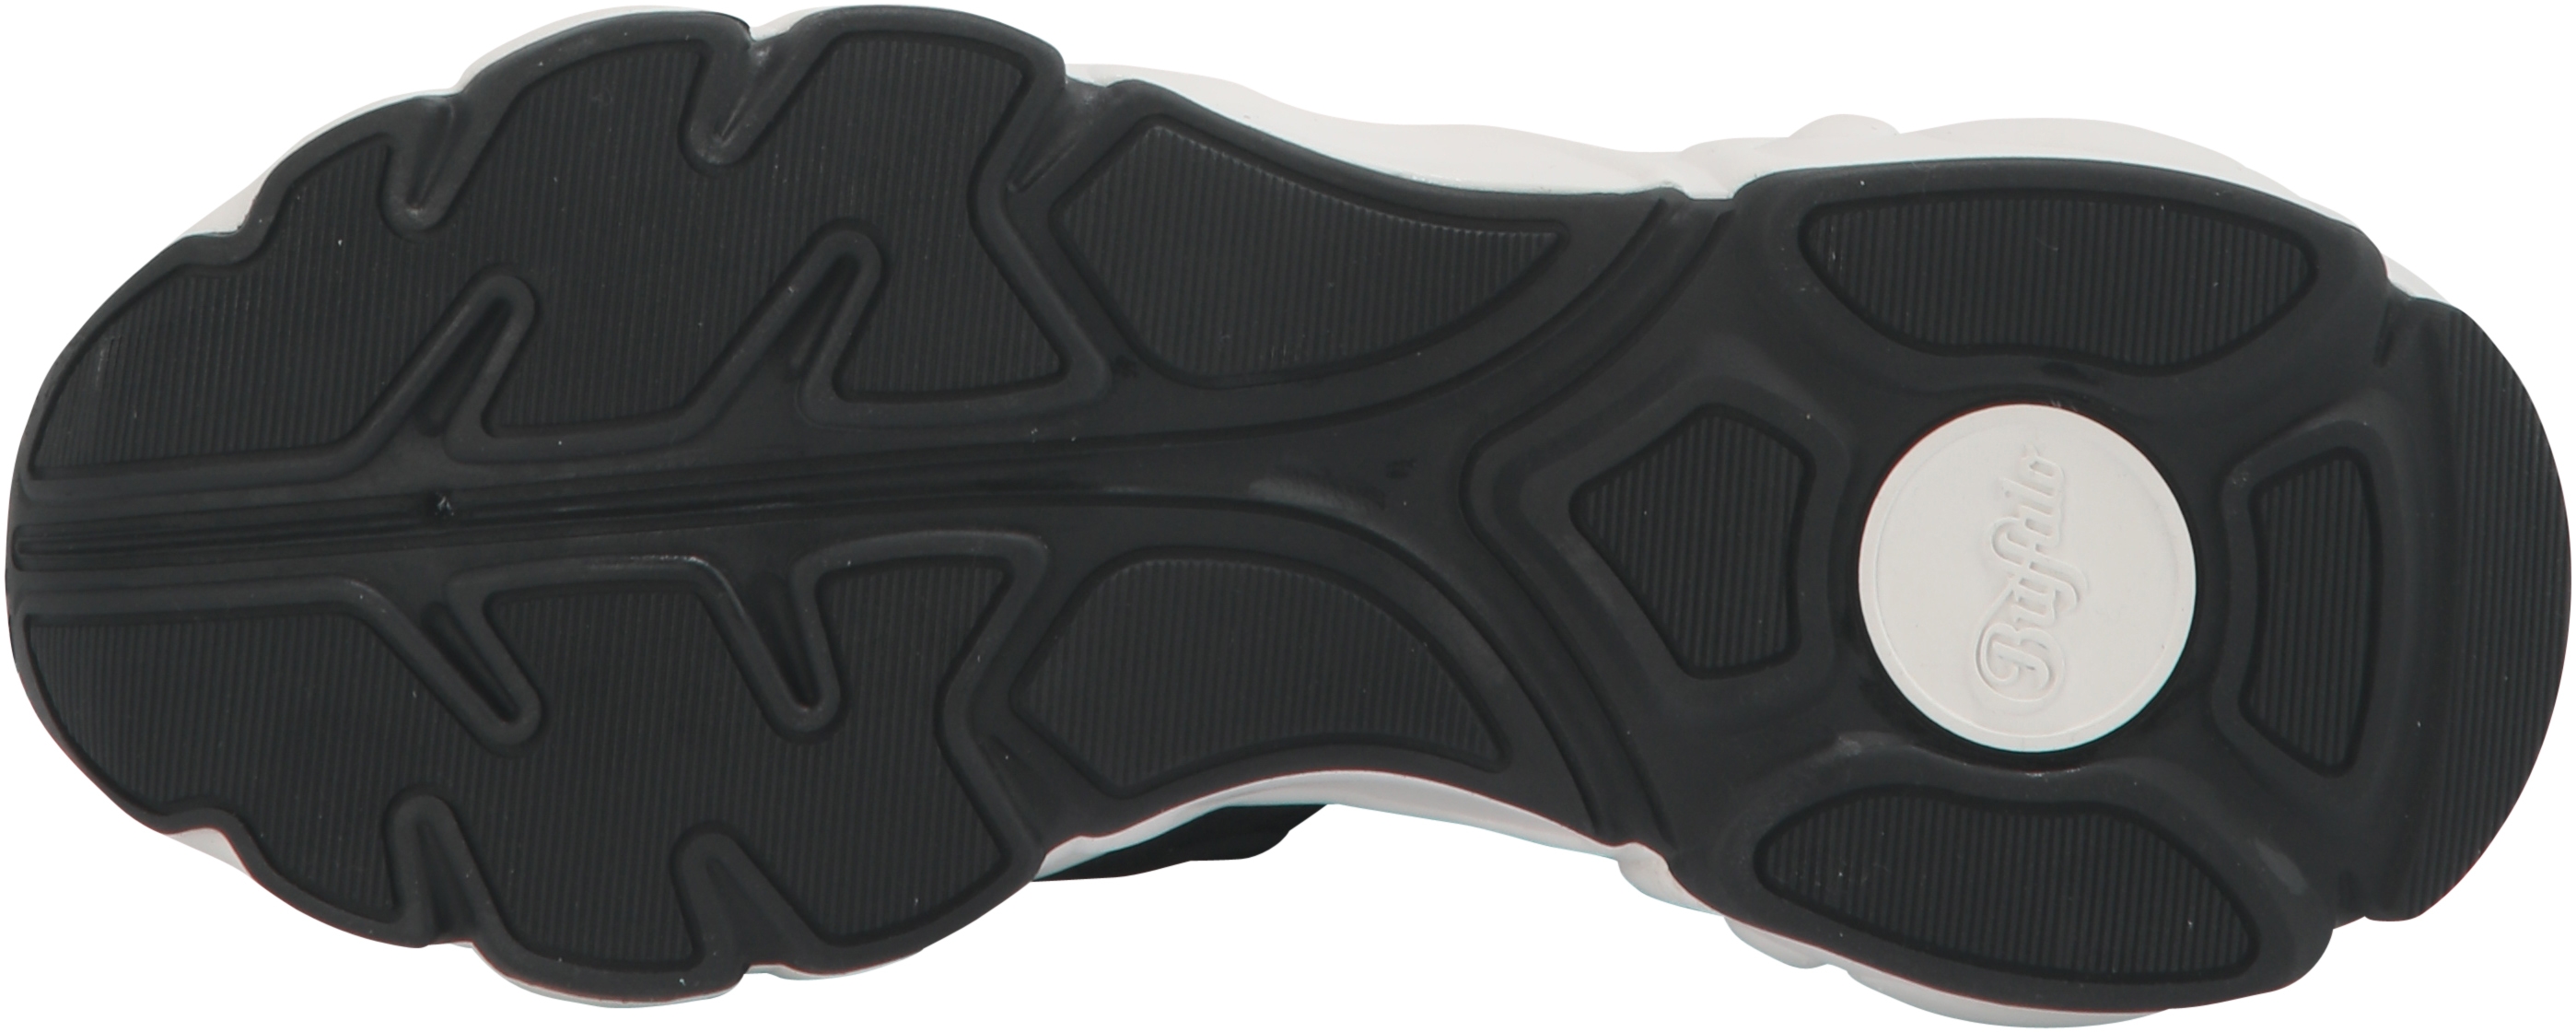 Buffalo Cld Run Sock - Sneaker Low - Textile - Black Textile